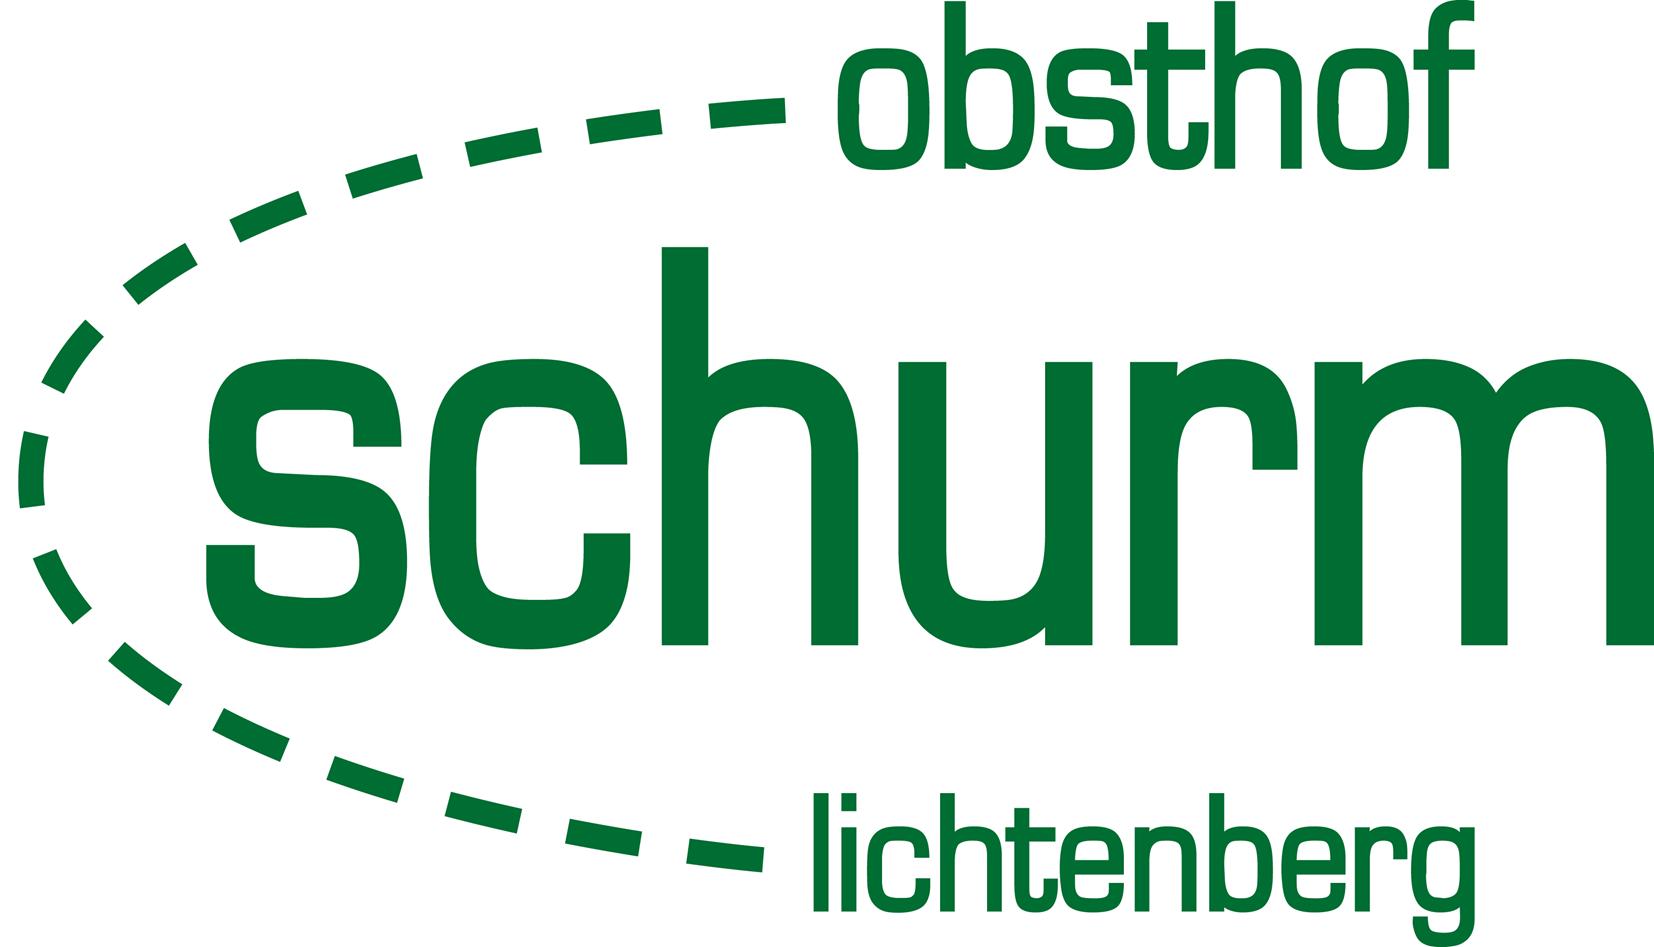 Obsthof Schurm